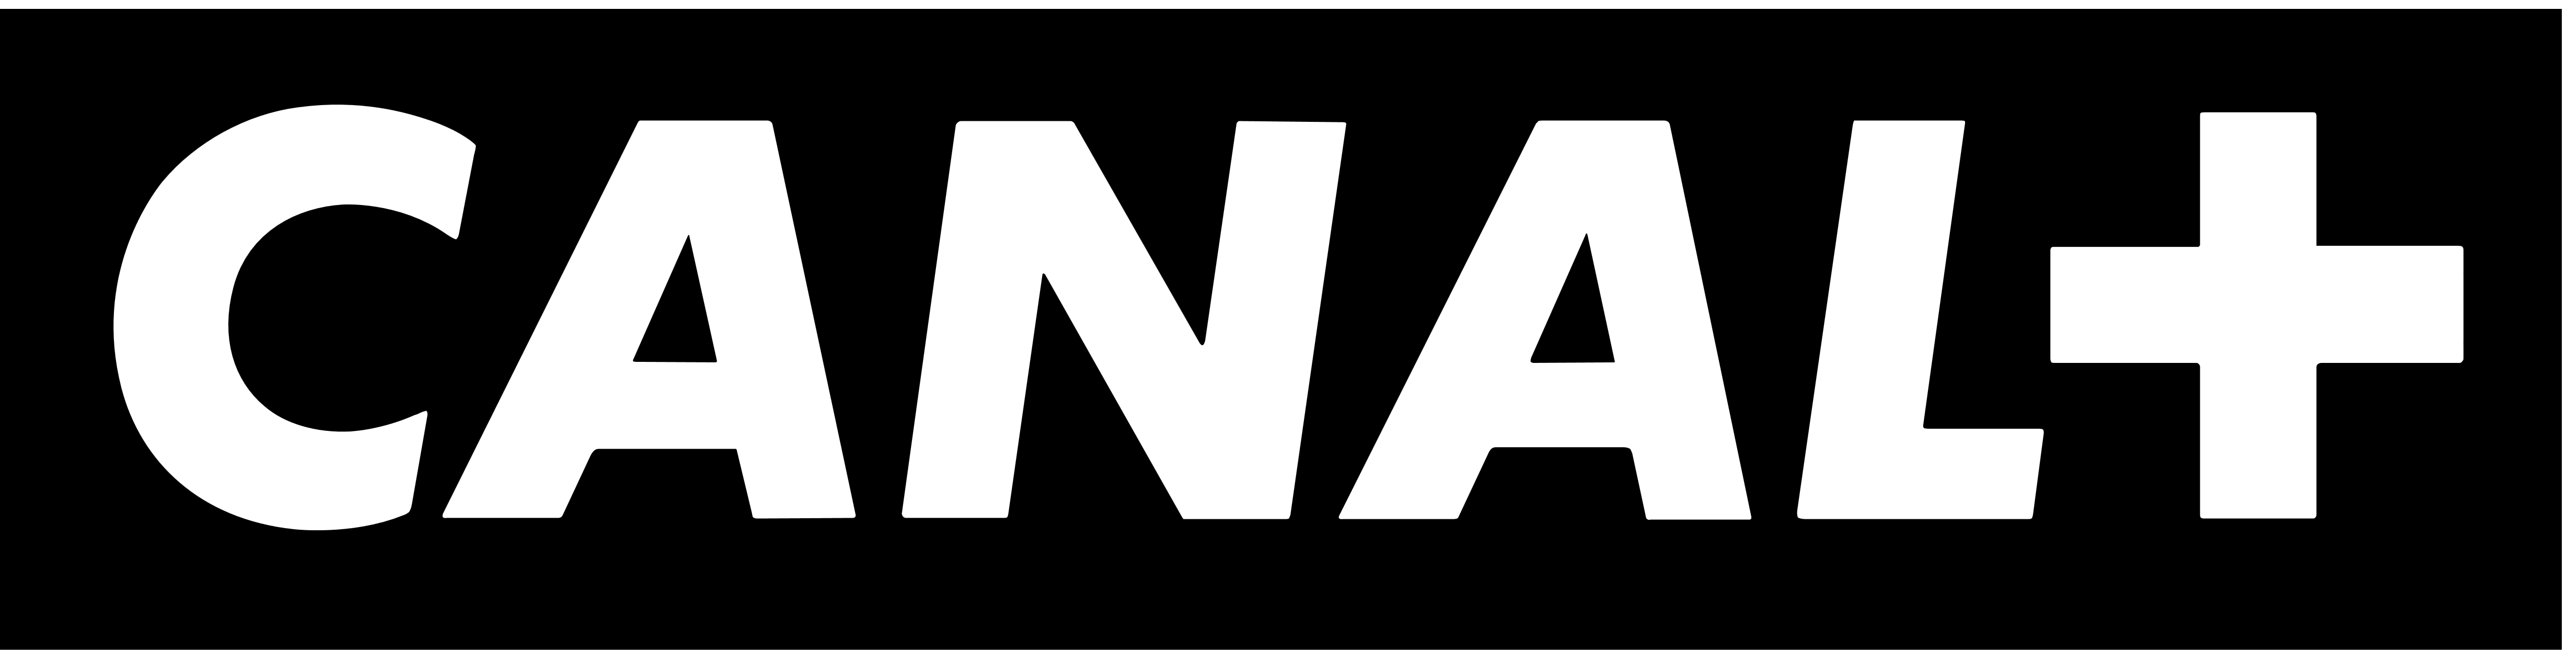 Canal+ – Logos Download